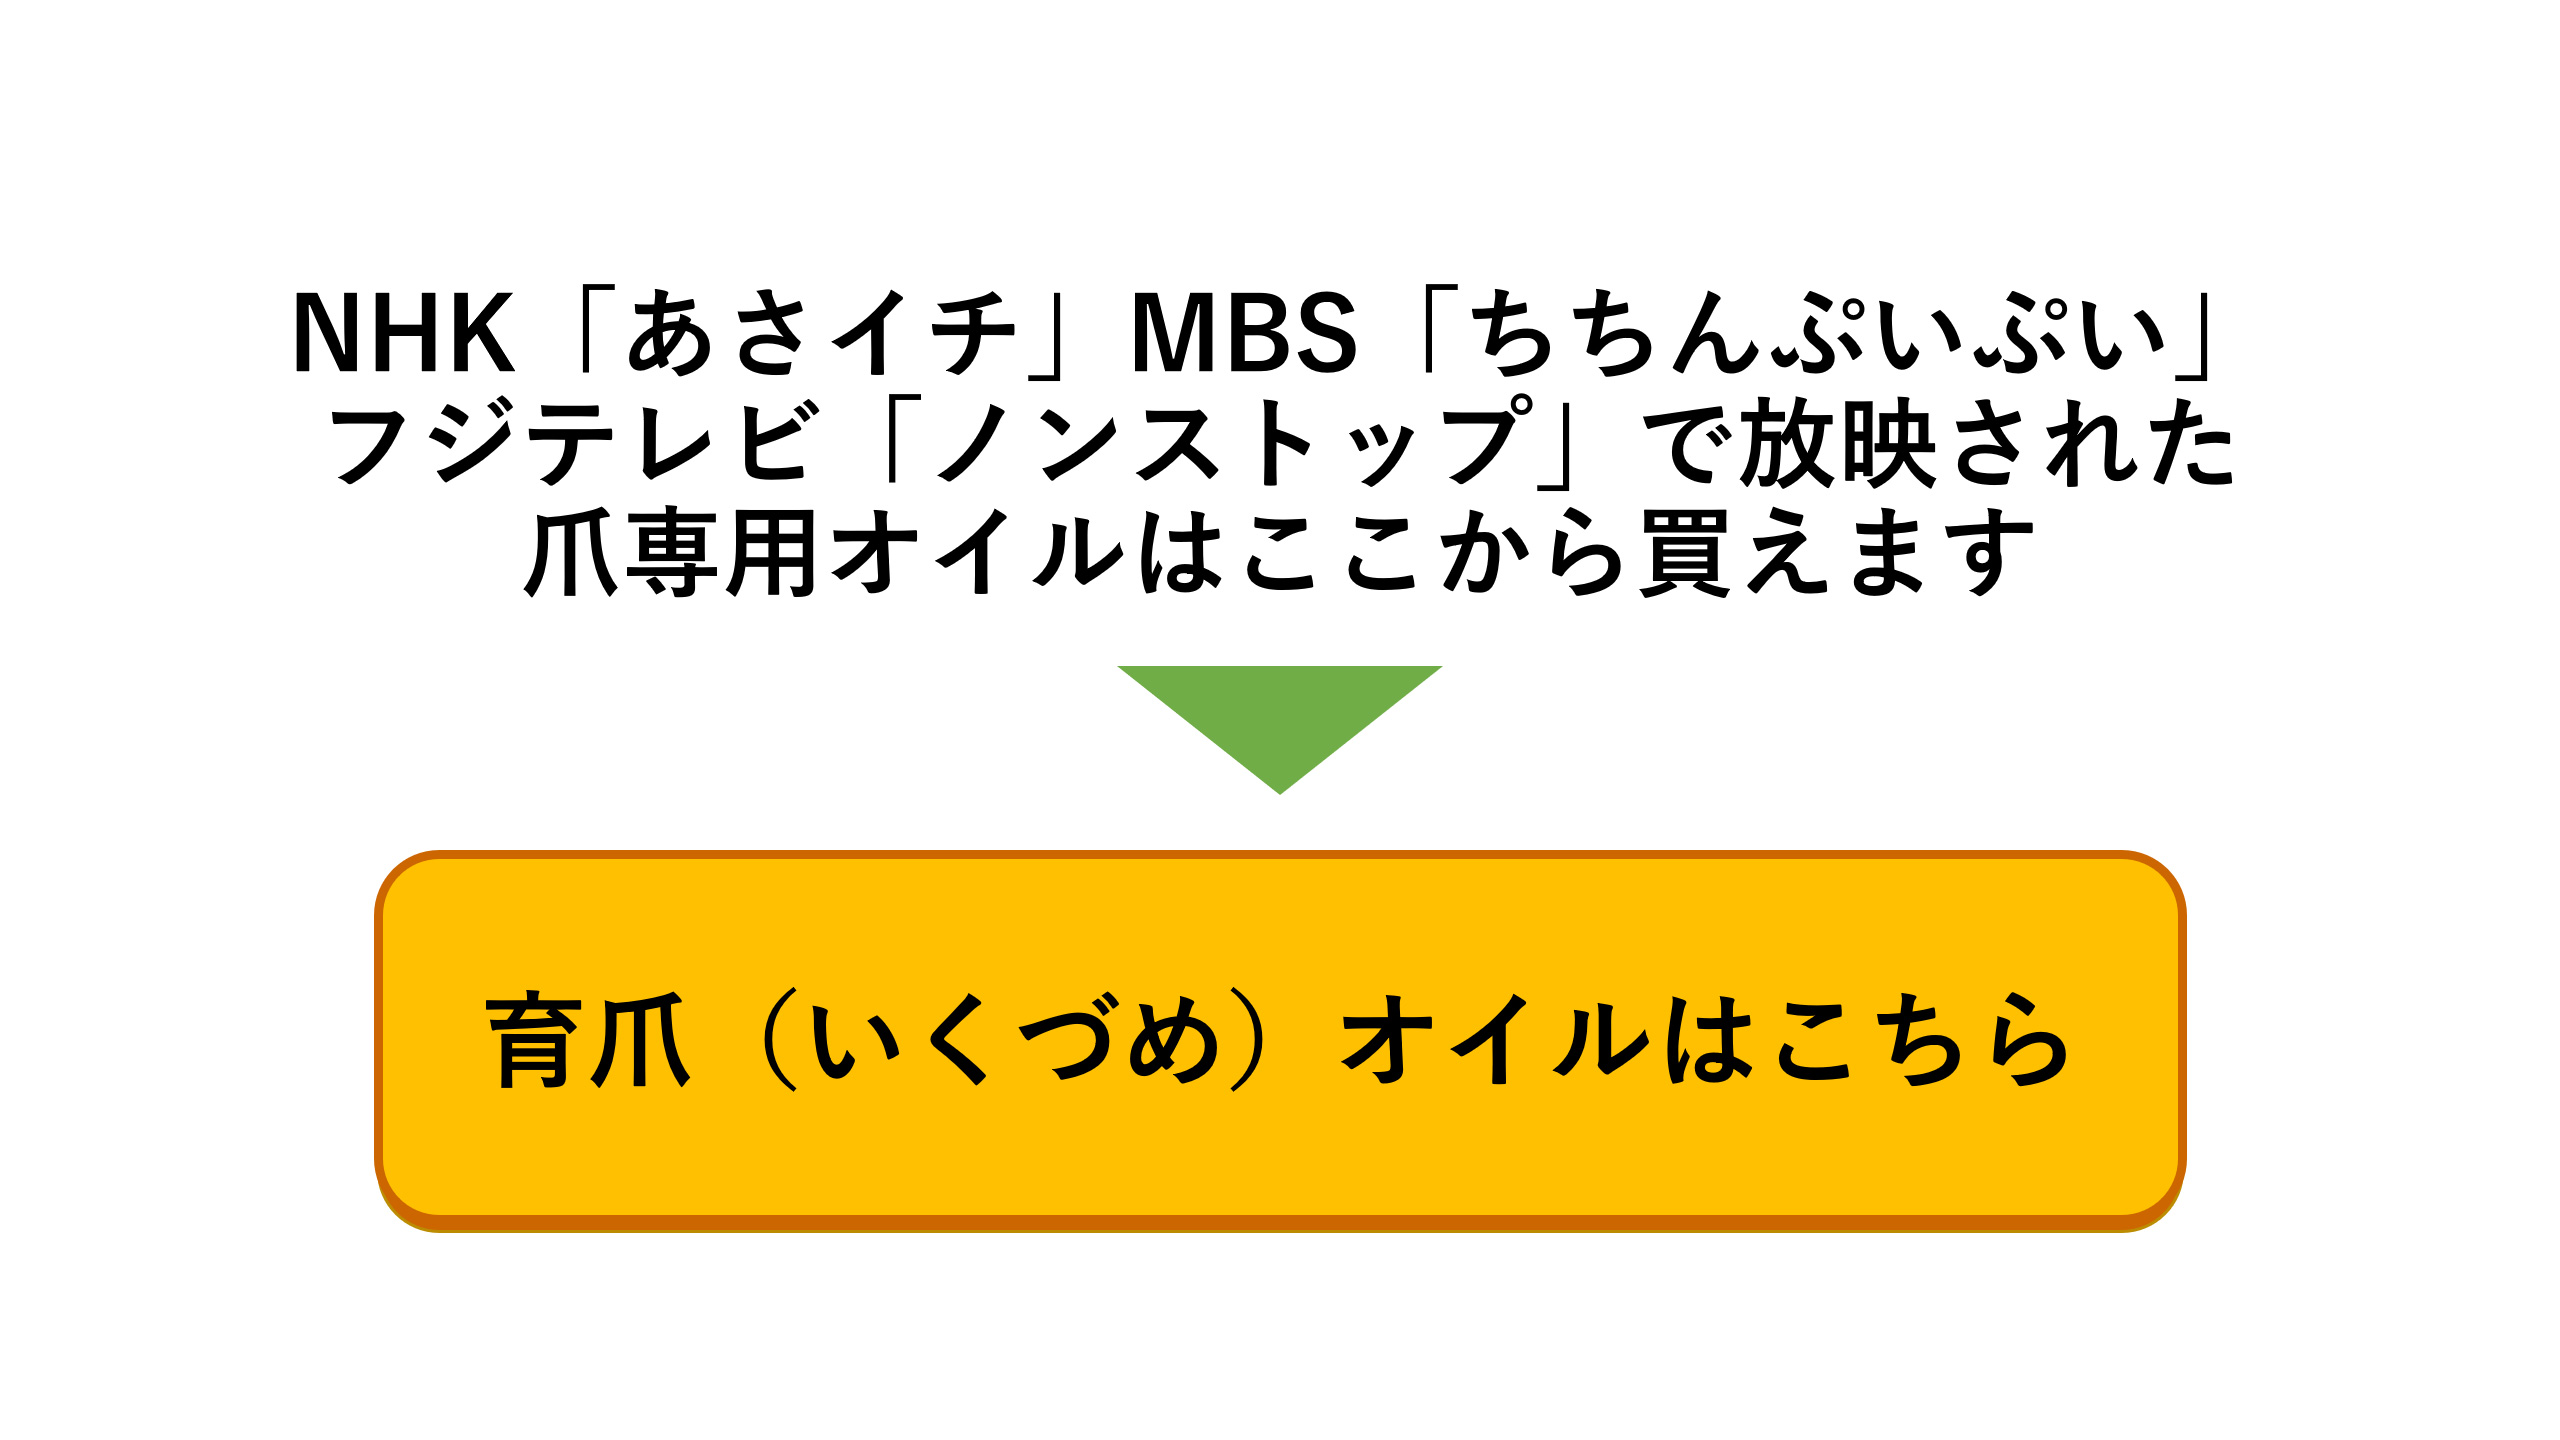 NHK あさイチ MBS ちちんぷいぷい フジテレビ ノンストップで放映された爪専用オイル 植物性オイル 天然オイル 育爪オイルの購入・通販